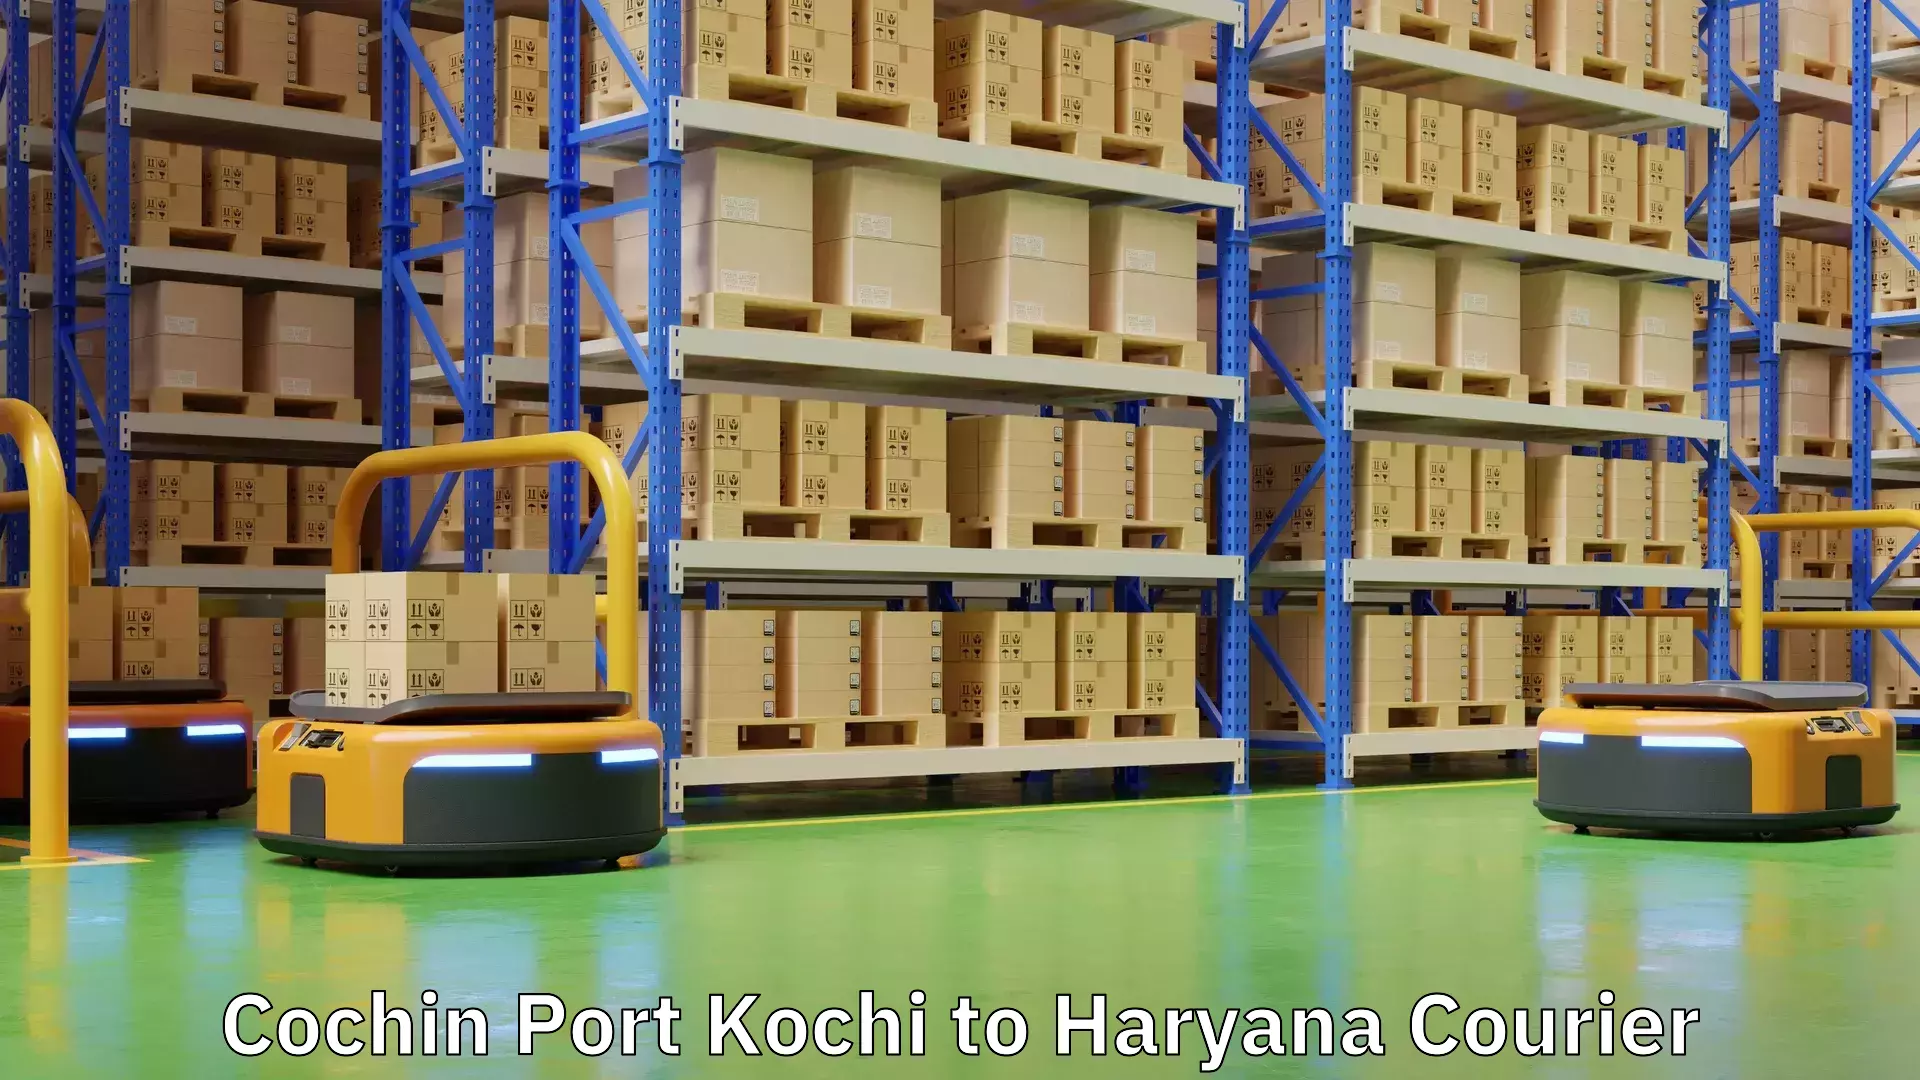 Global shipping networks Cochin Port Kochi to Haryana